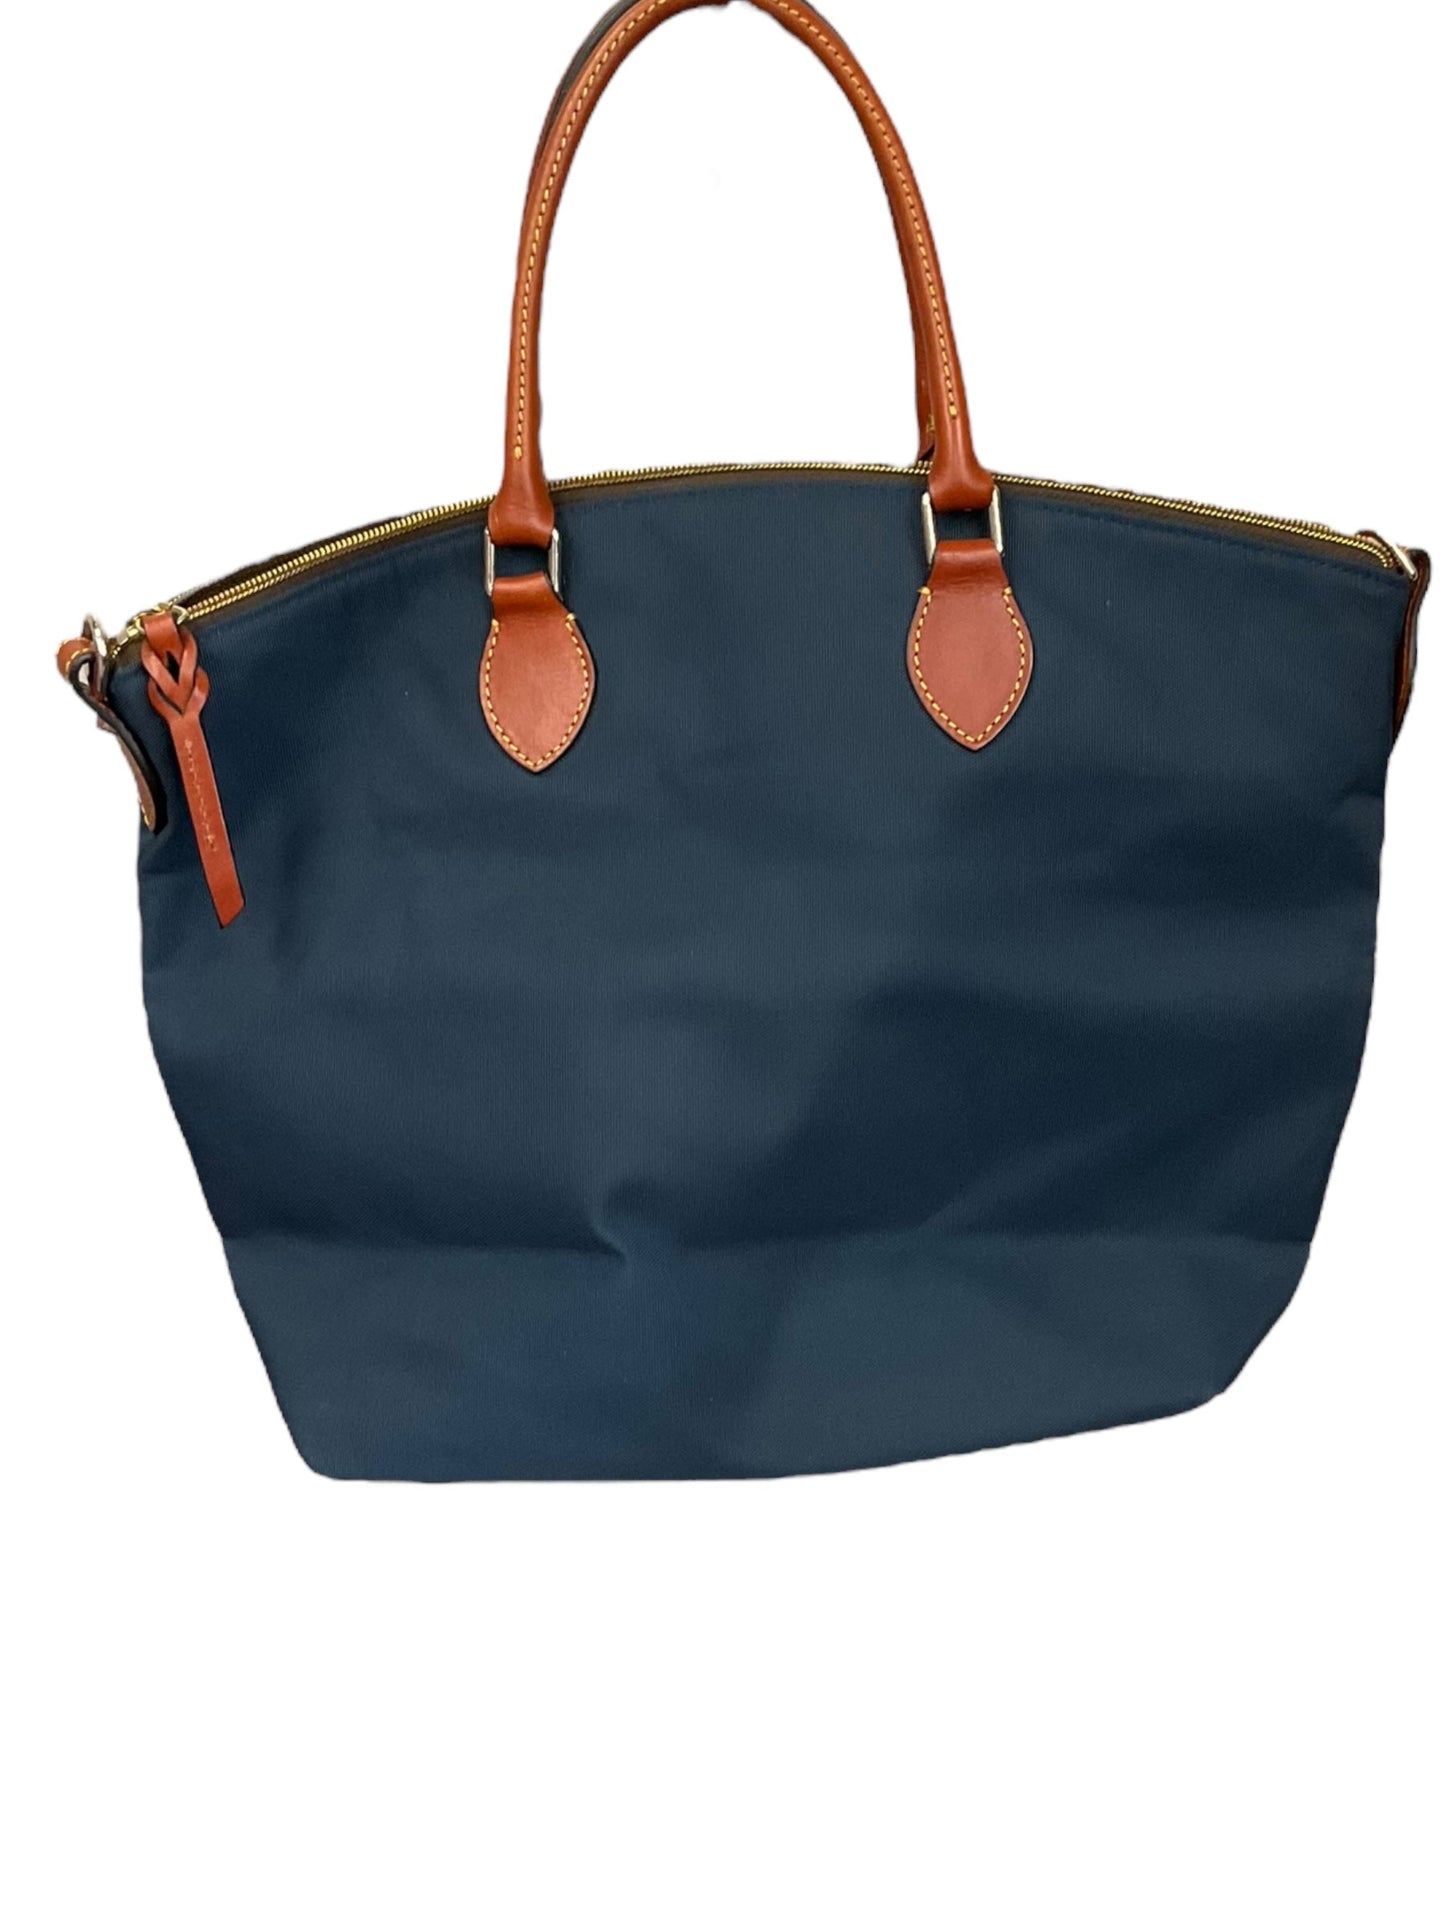 Handbag Designer Dooney And Bourke, Size Medium